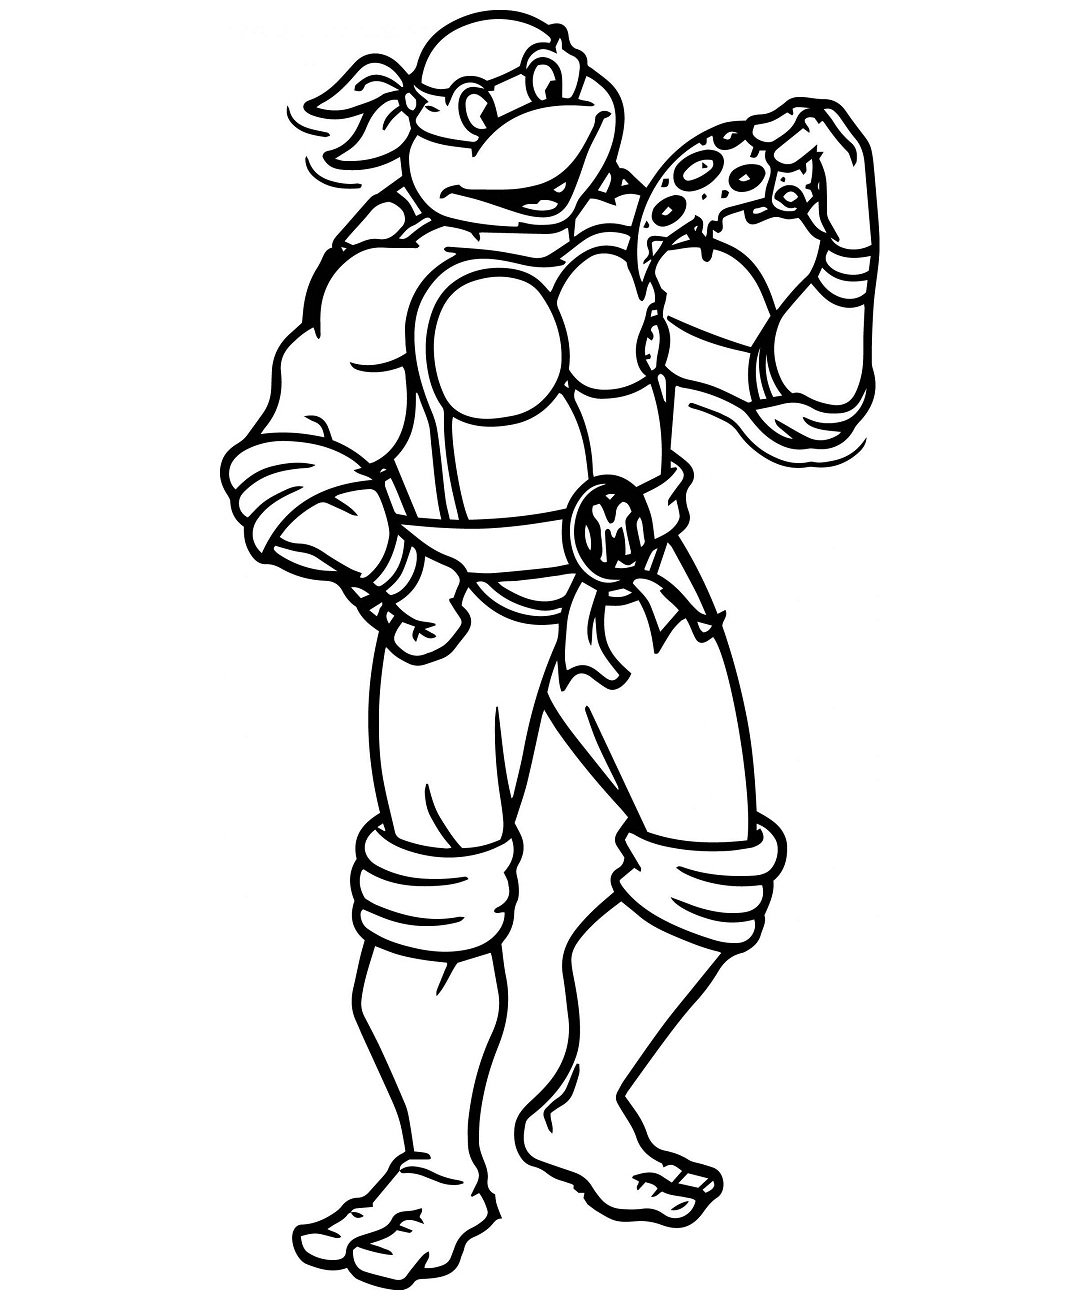 Crayola 18 Sheet Teenage Mutant Ninja Turtles Giant Coloring Book